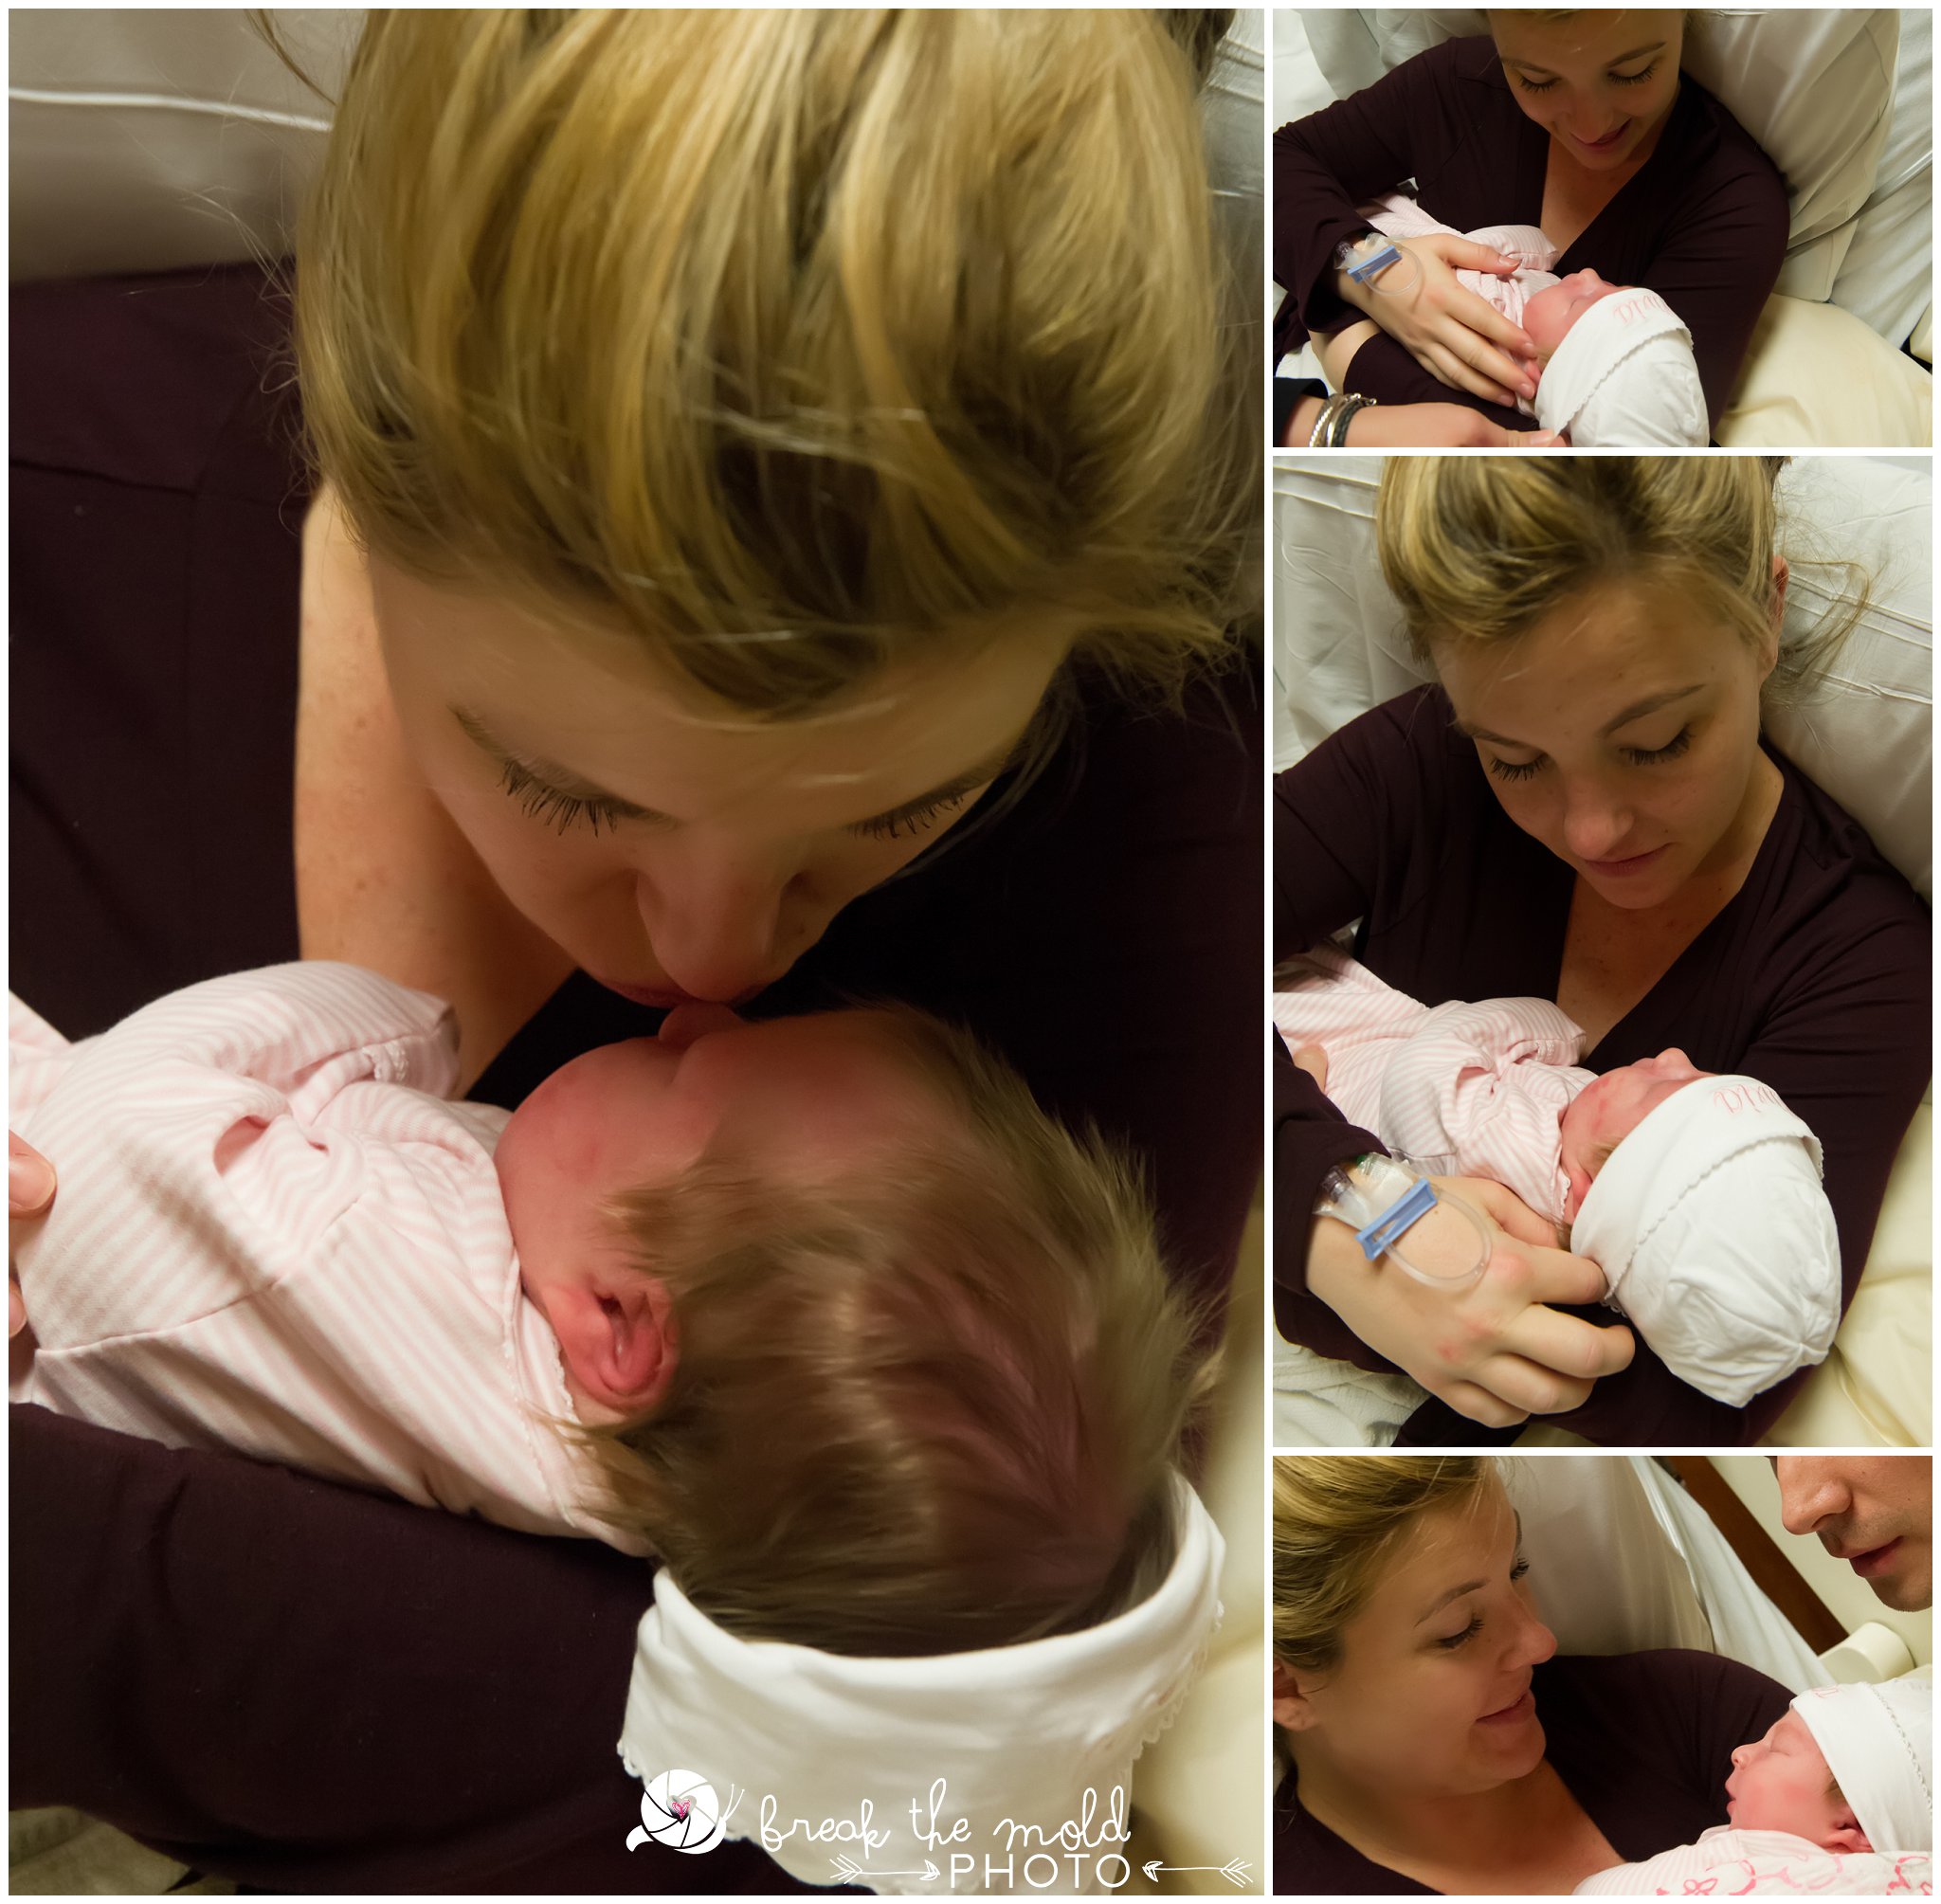 fresh-24-newborn-in-hospital-break-the-mold-photo-baby-girl-sweet-in-room-photos (15).jpg